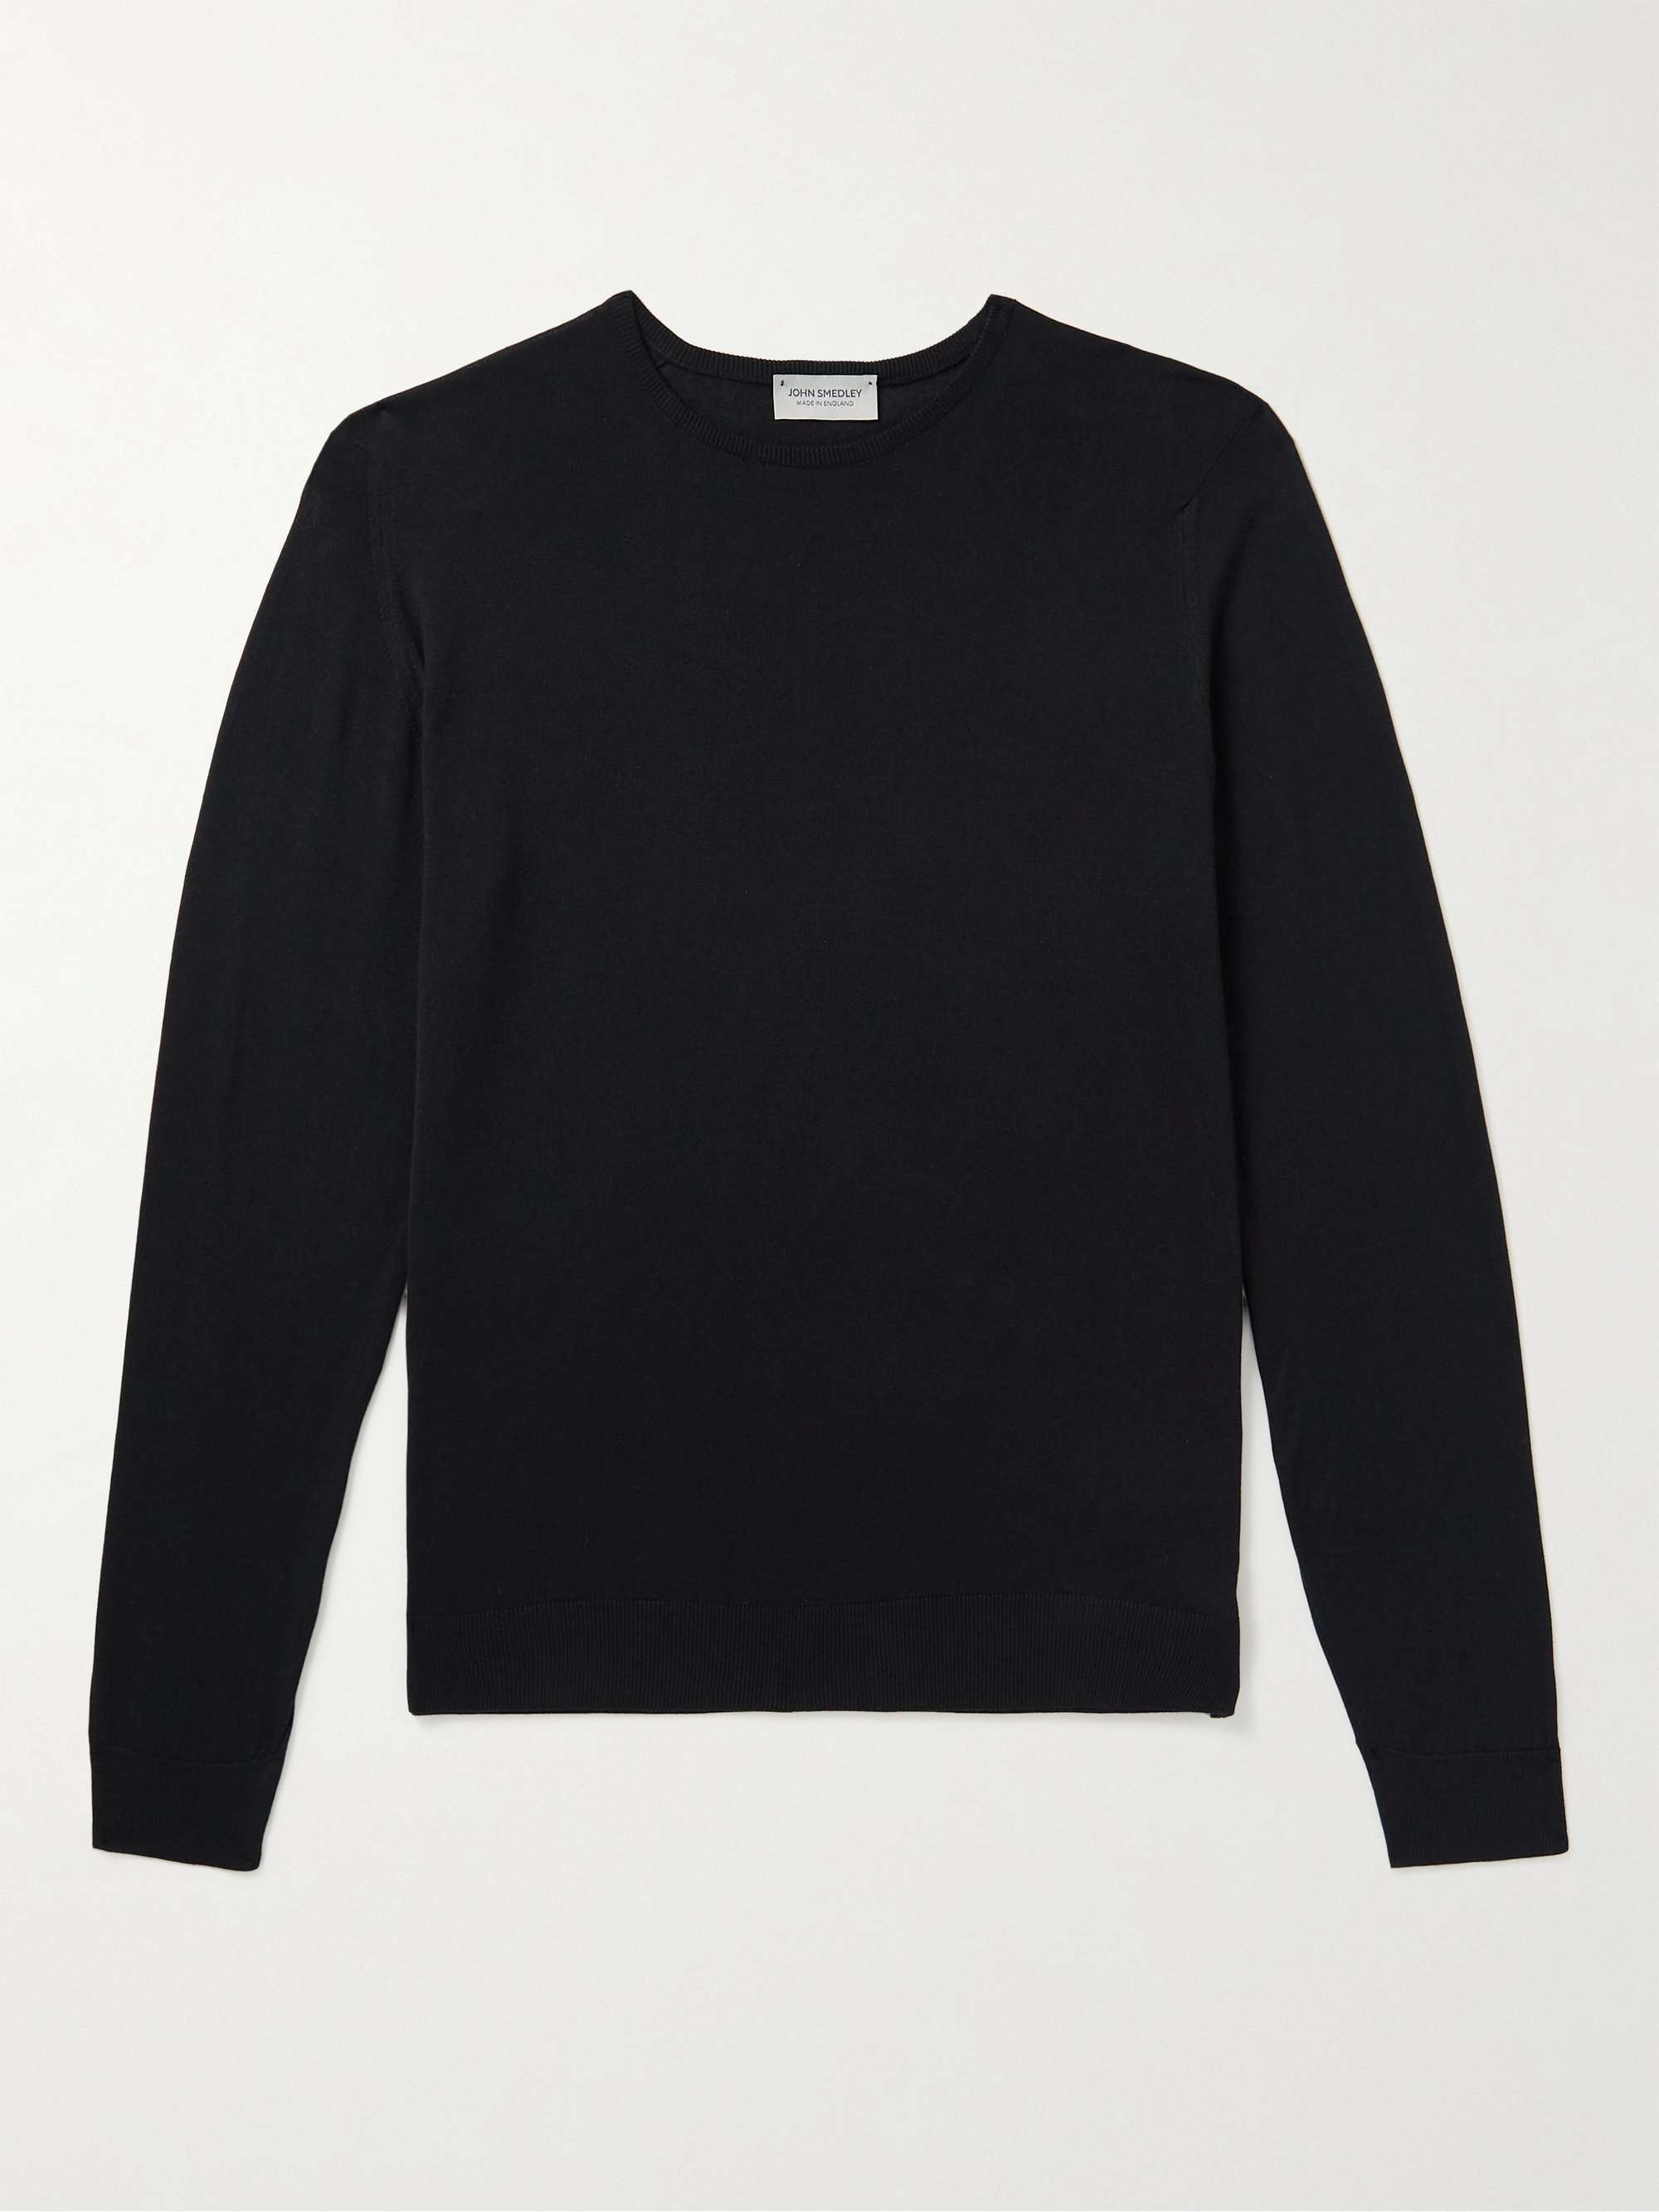 Hatfield Slim-Fit Sea Island Cotton Sweater